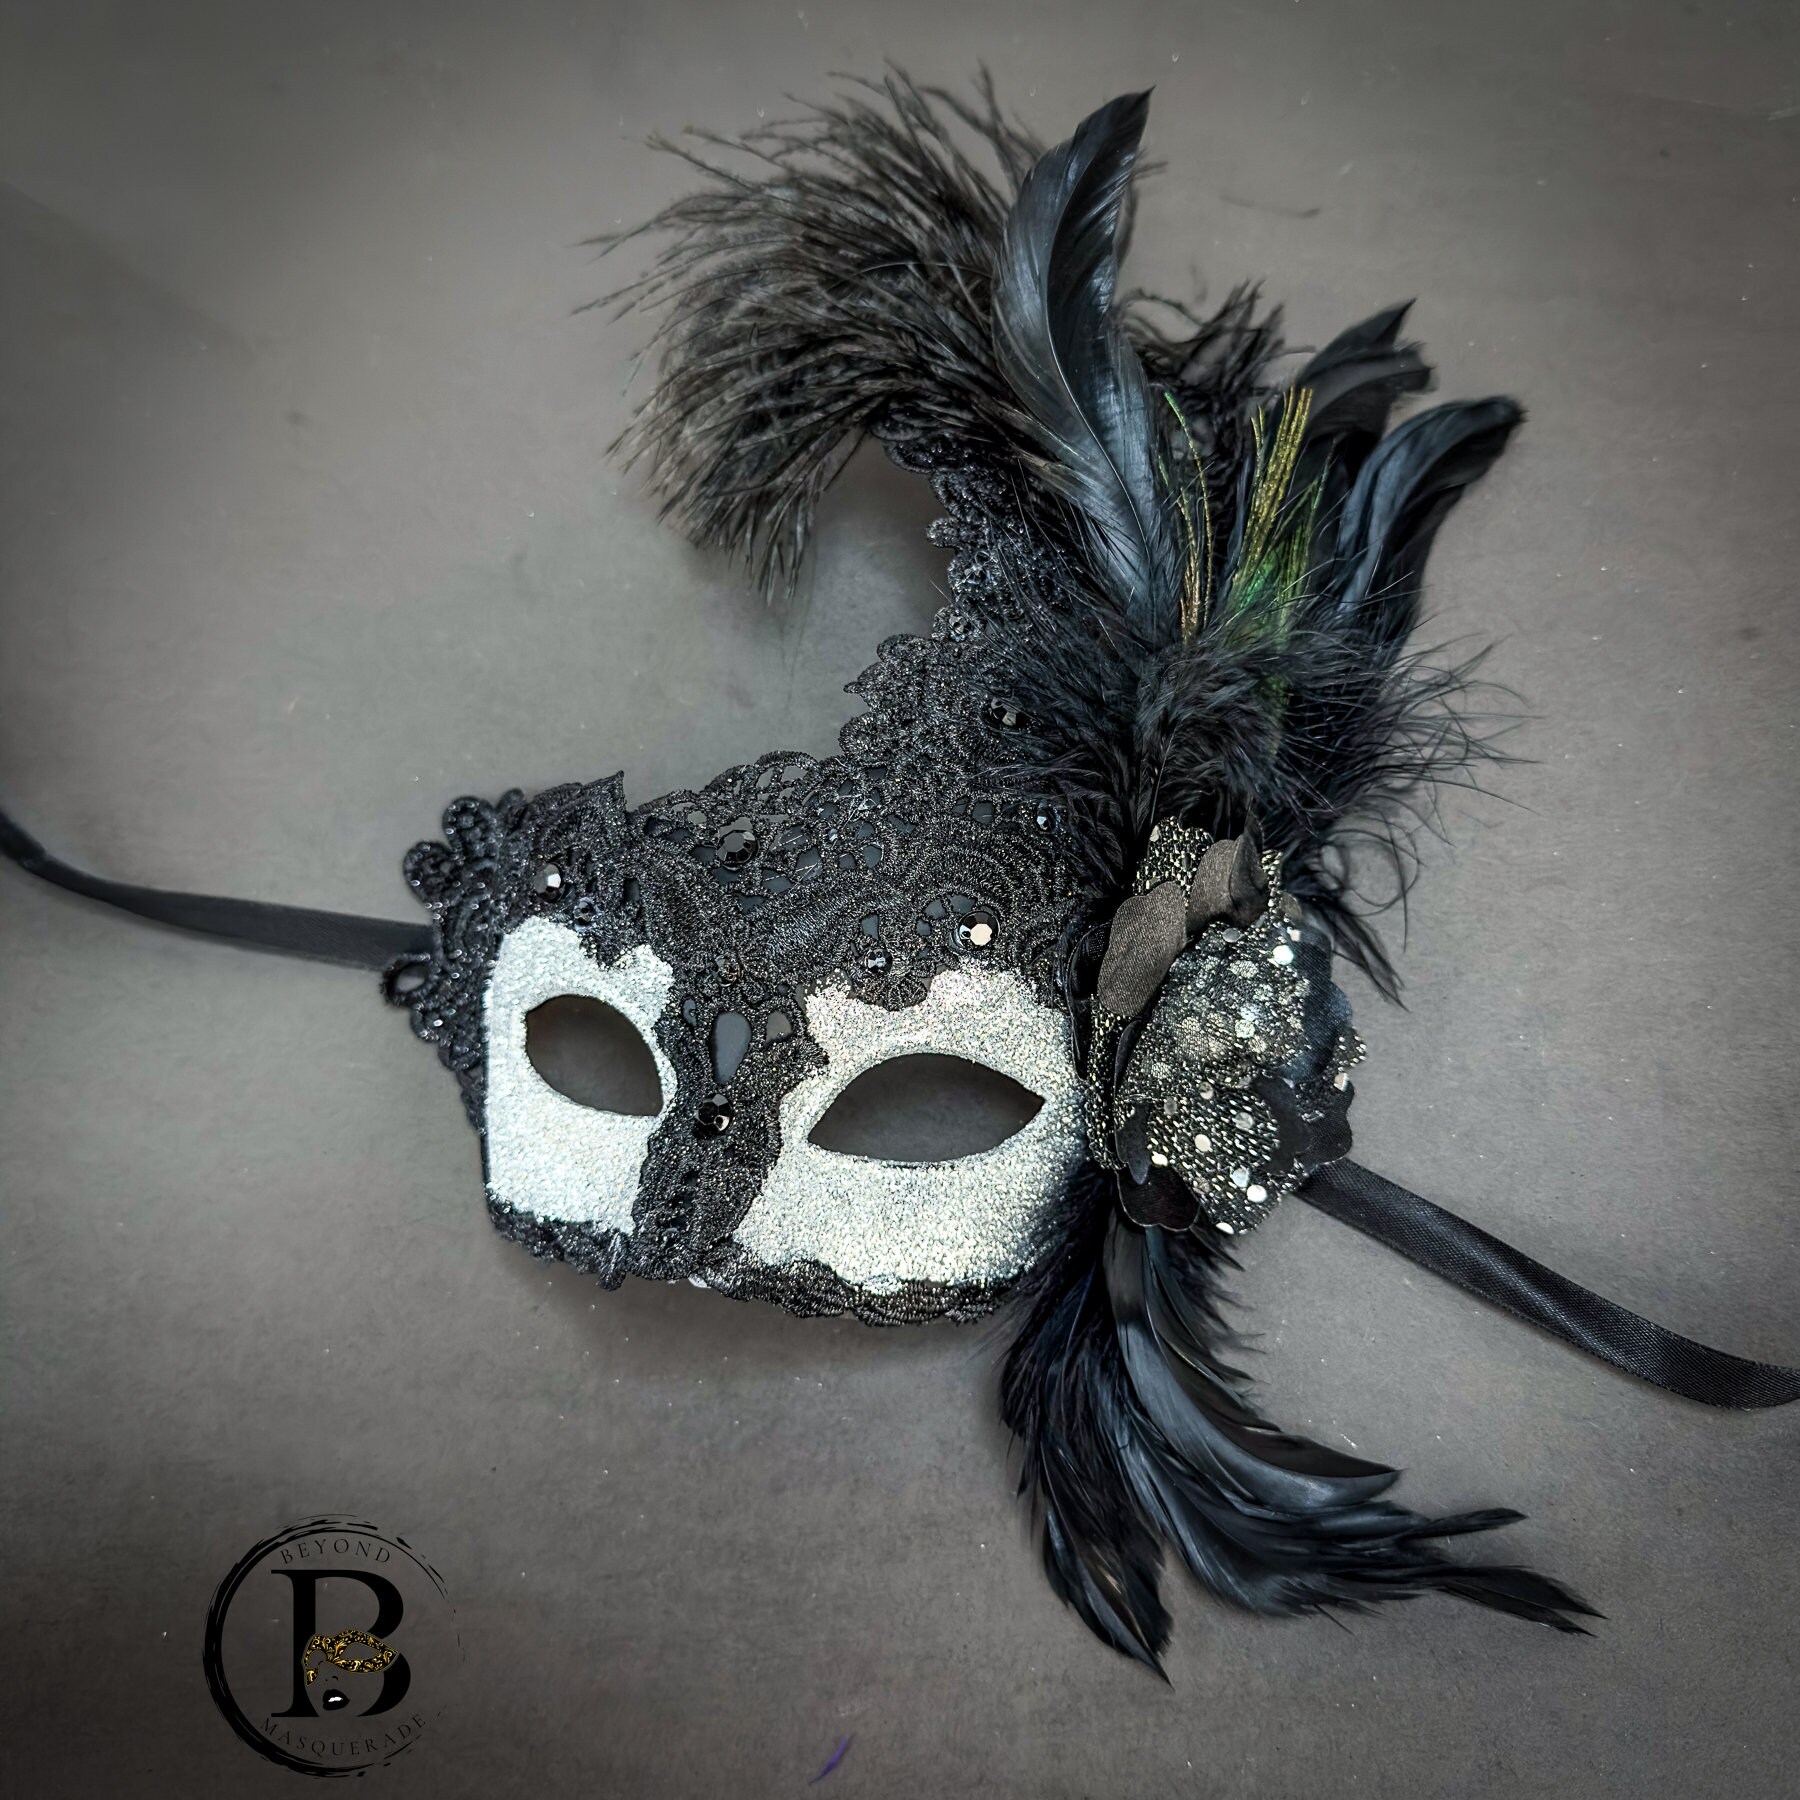 Black Feather Masquerade Masks, Masks Women, Large Feathers, Great